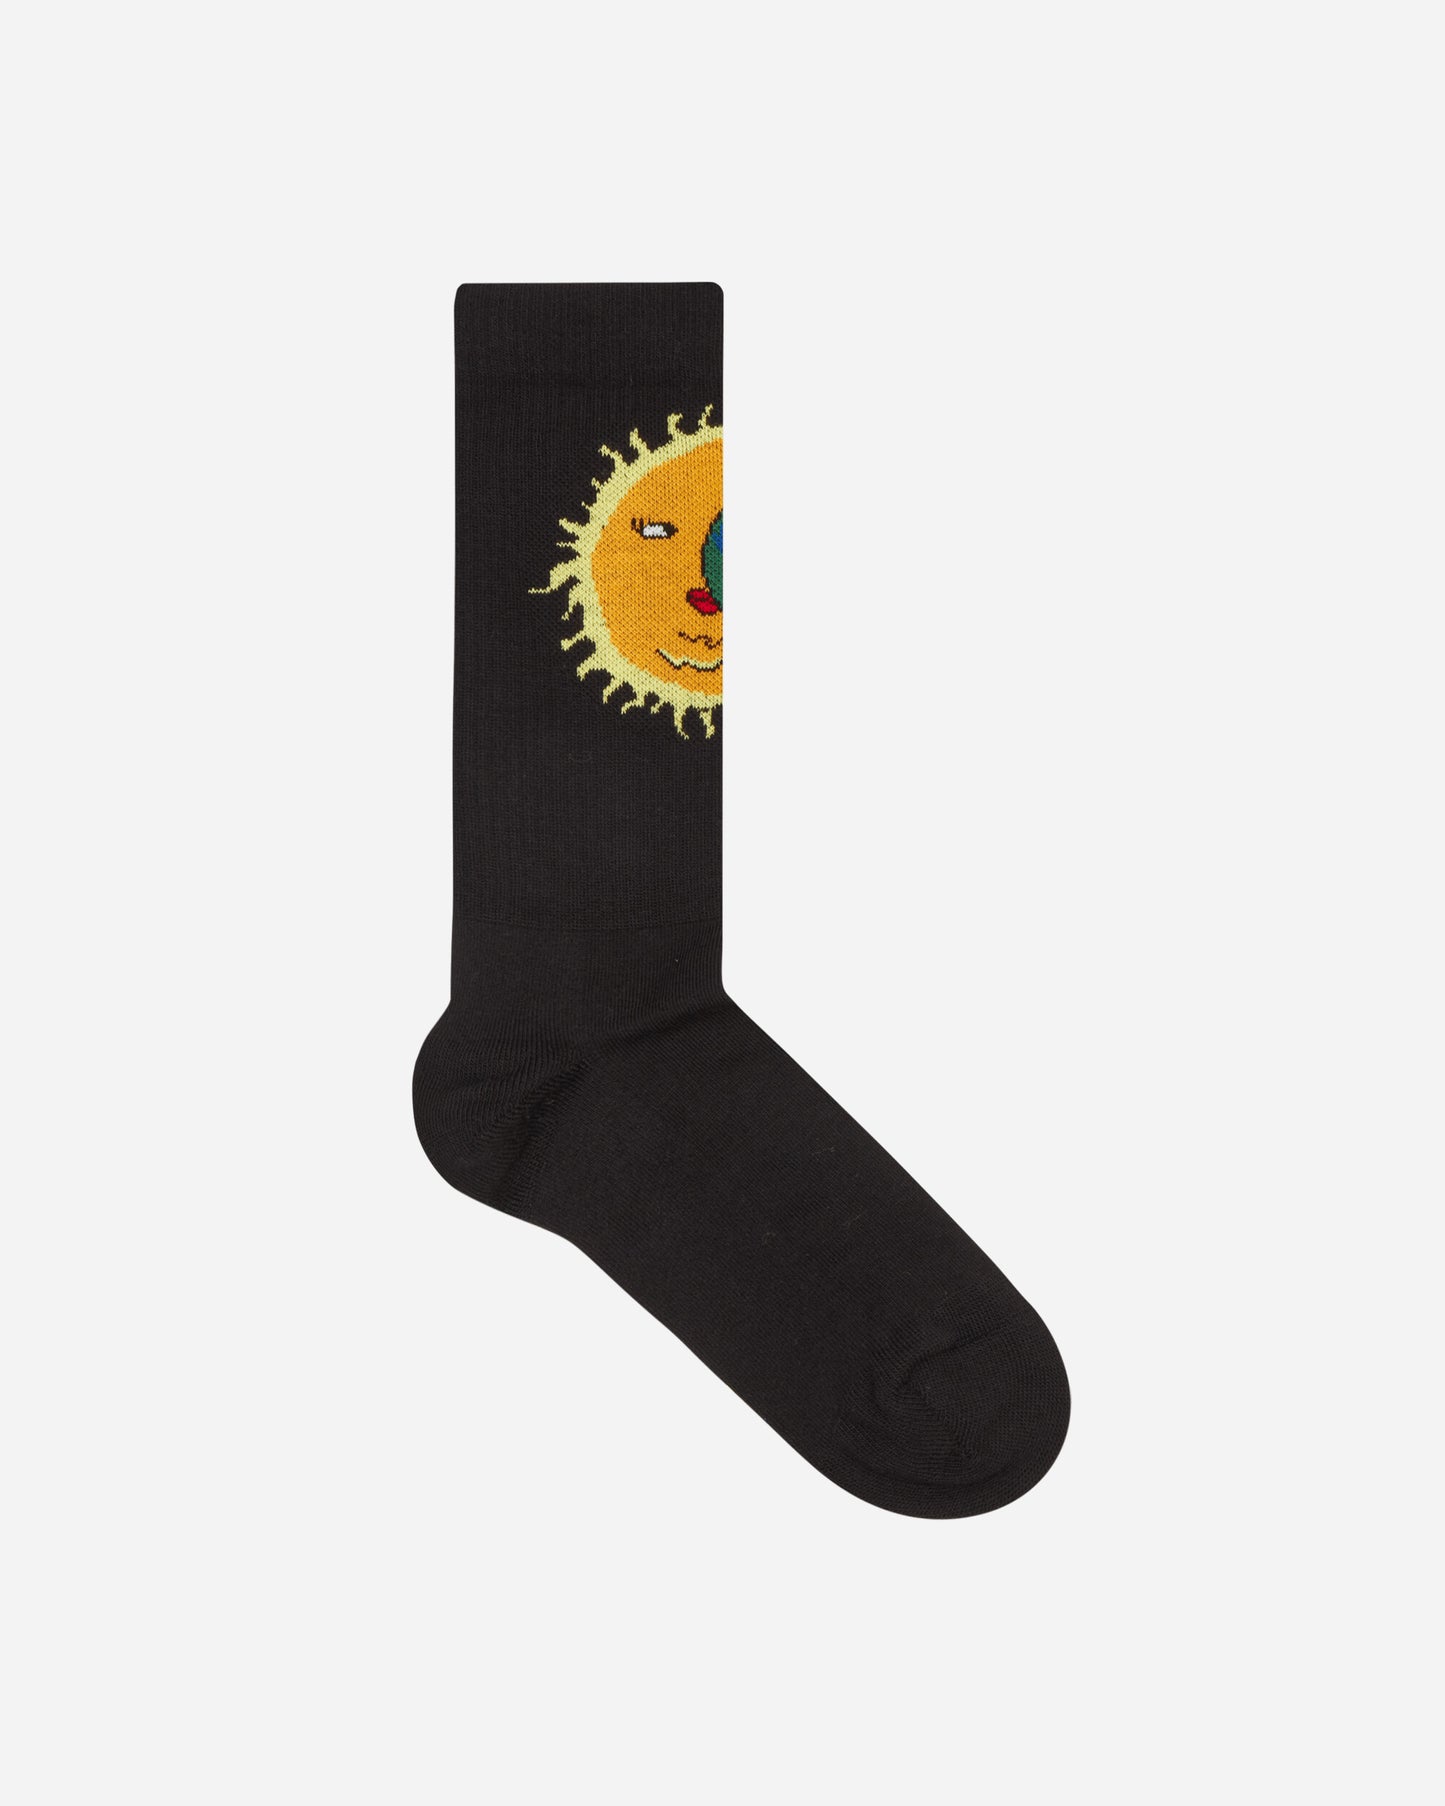 Sky High Farm Moon Earth Jacquard Socks Knit Black Underwear Socks SHF04K001  1